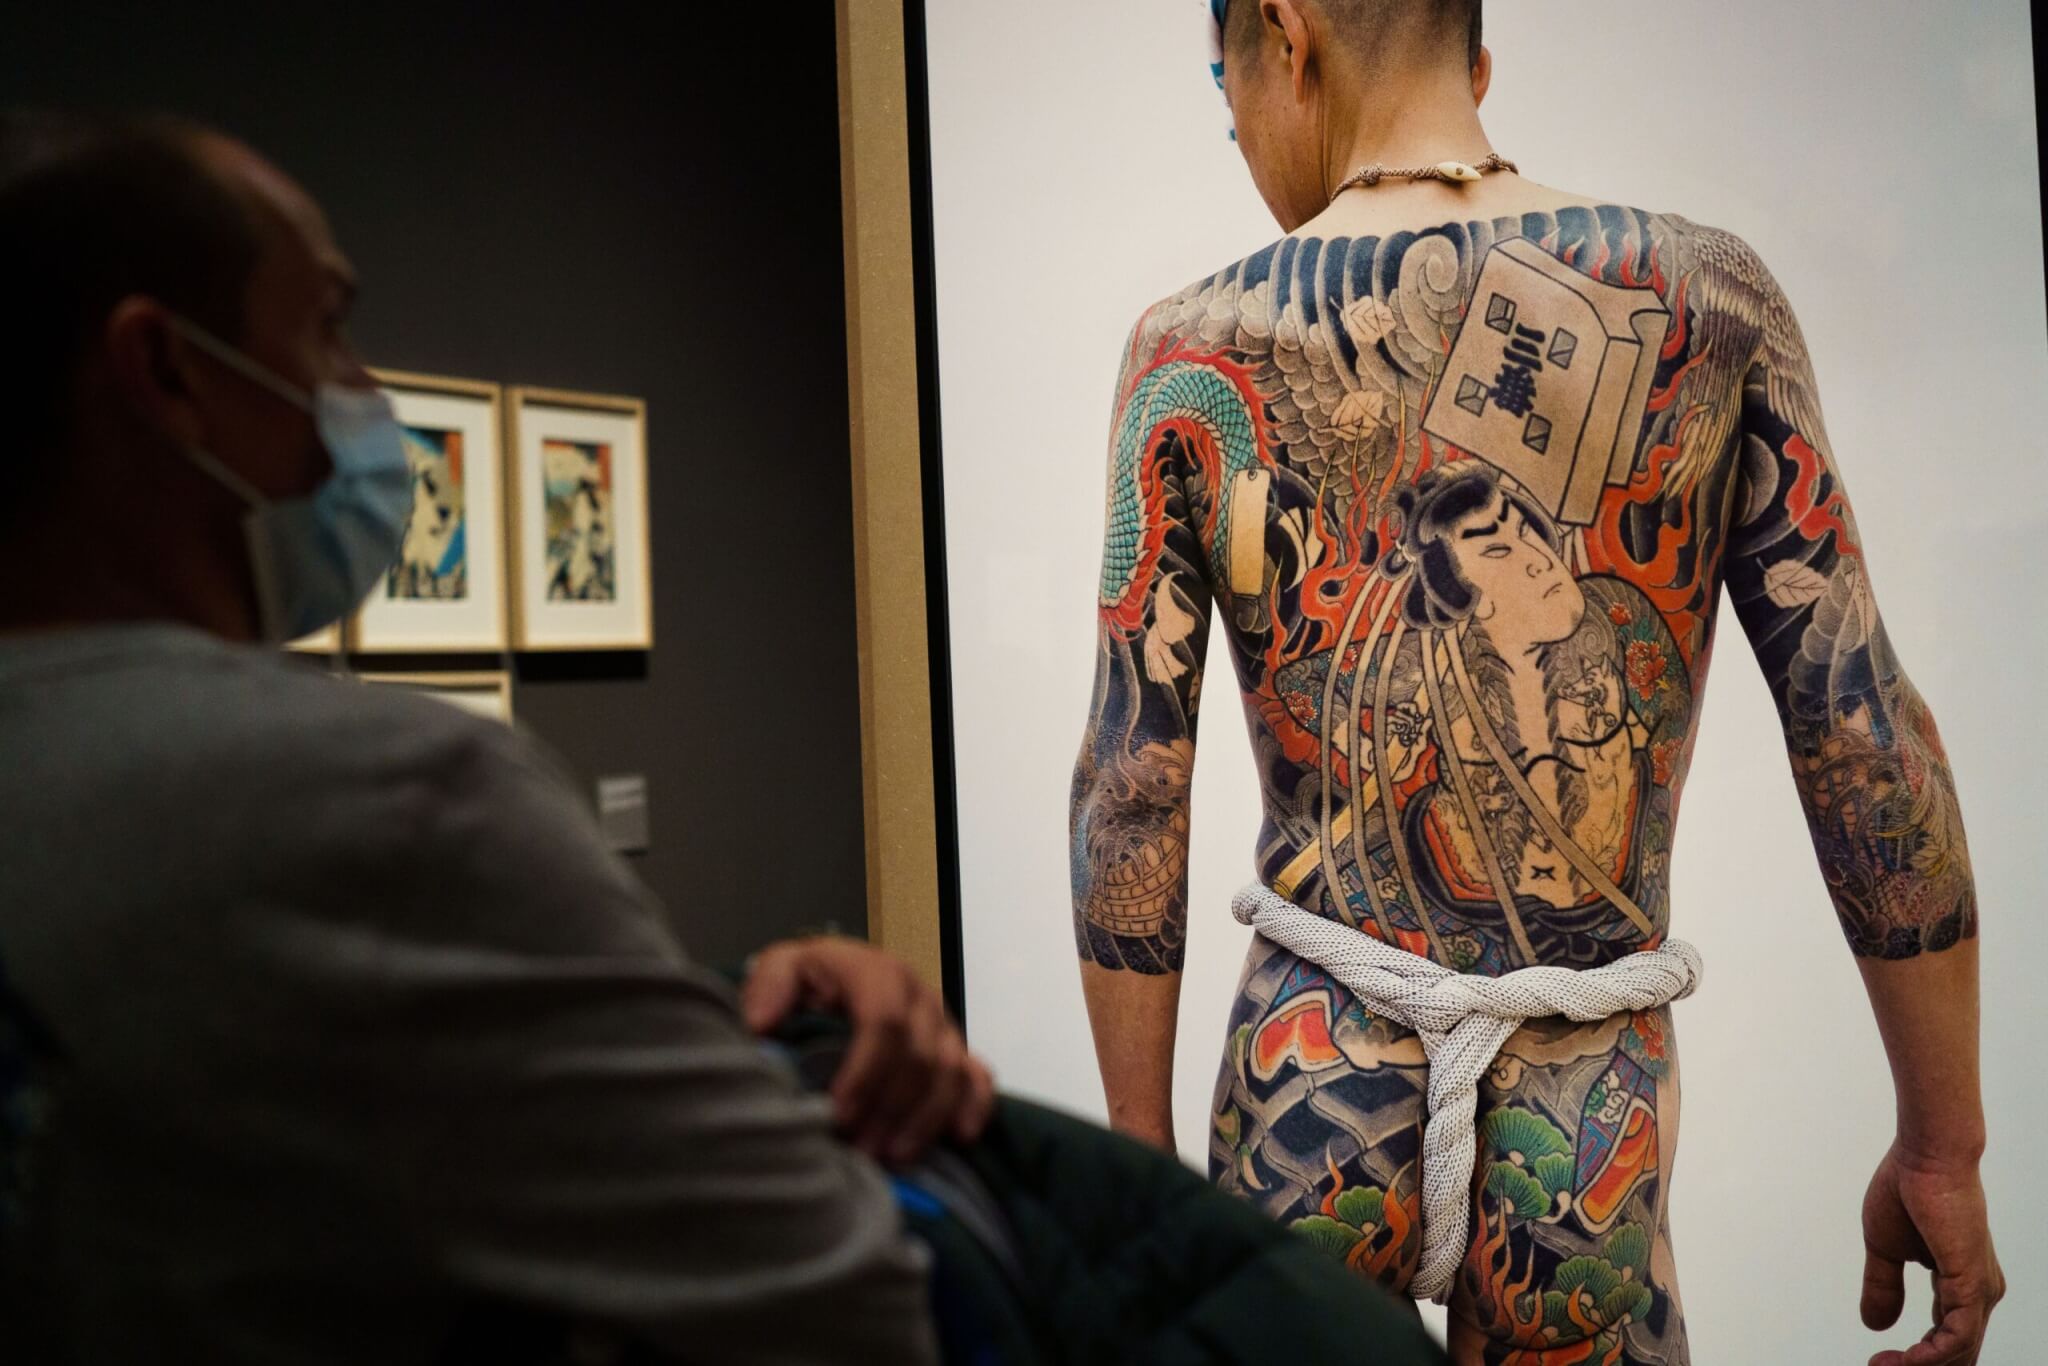 Tattooed man by the artist horikazu seen during the "Arte Bajo La Piel" exhibition at the CaixaForum centre.